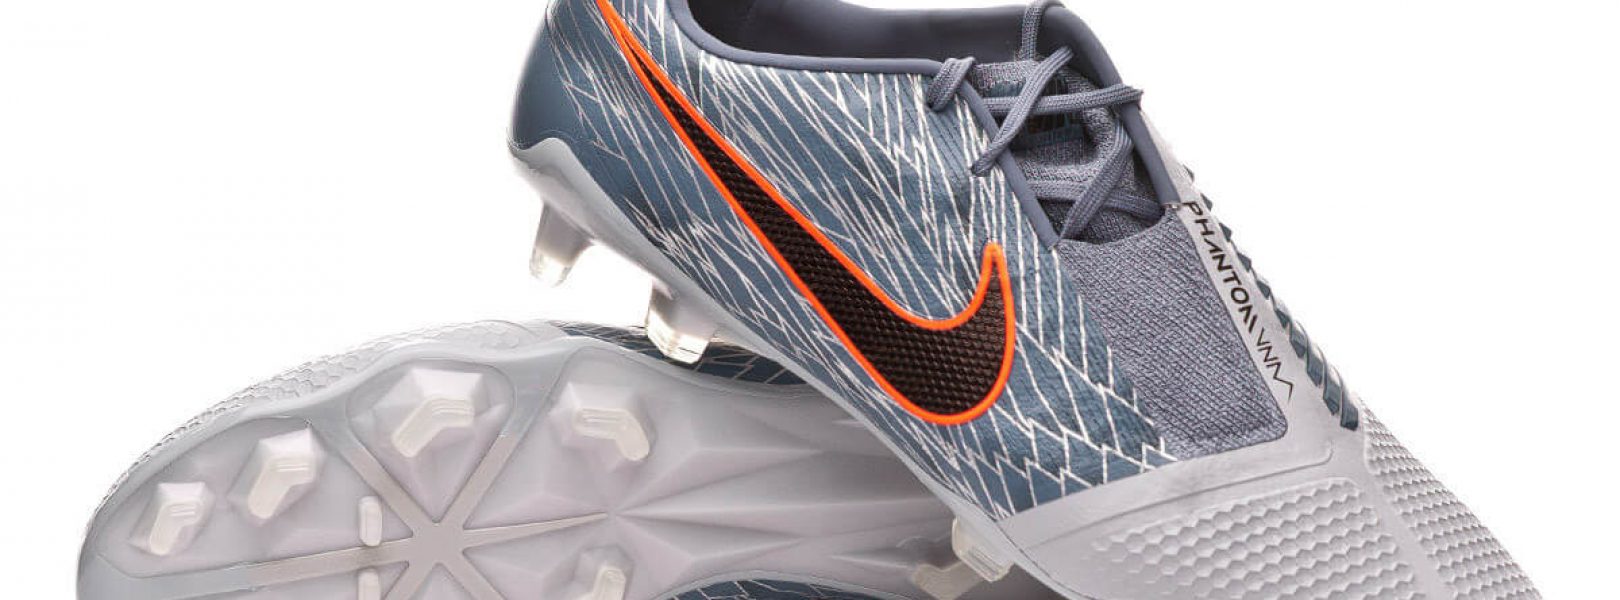 Nike Mens Hypervenom Phantom III FG Football BOOTS 9.5